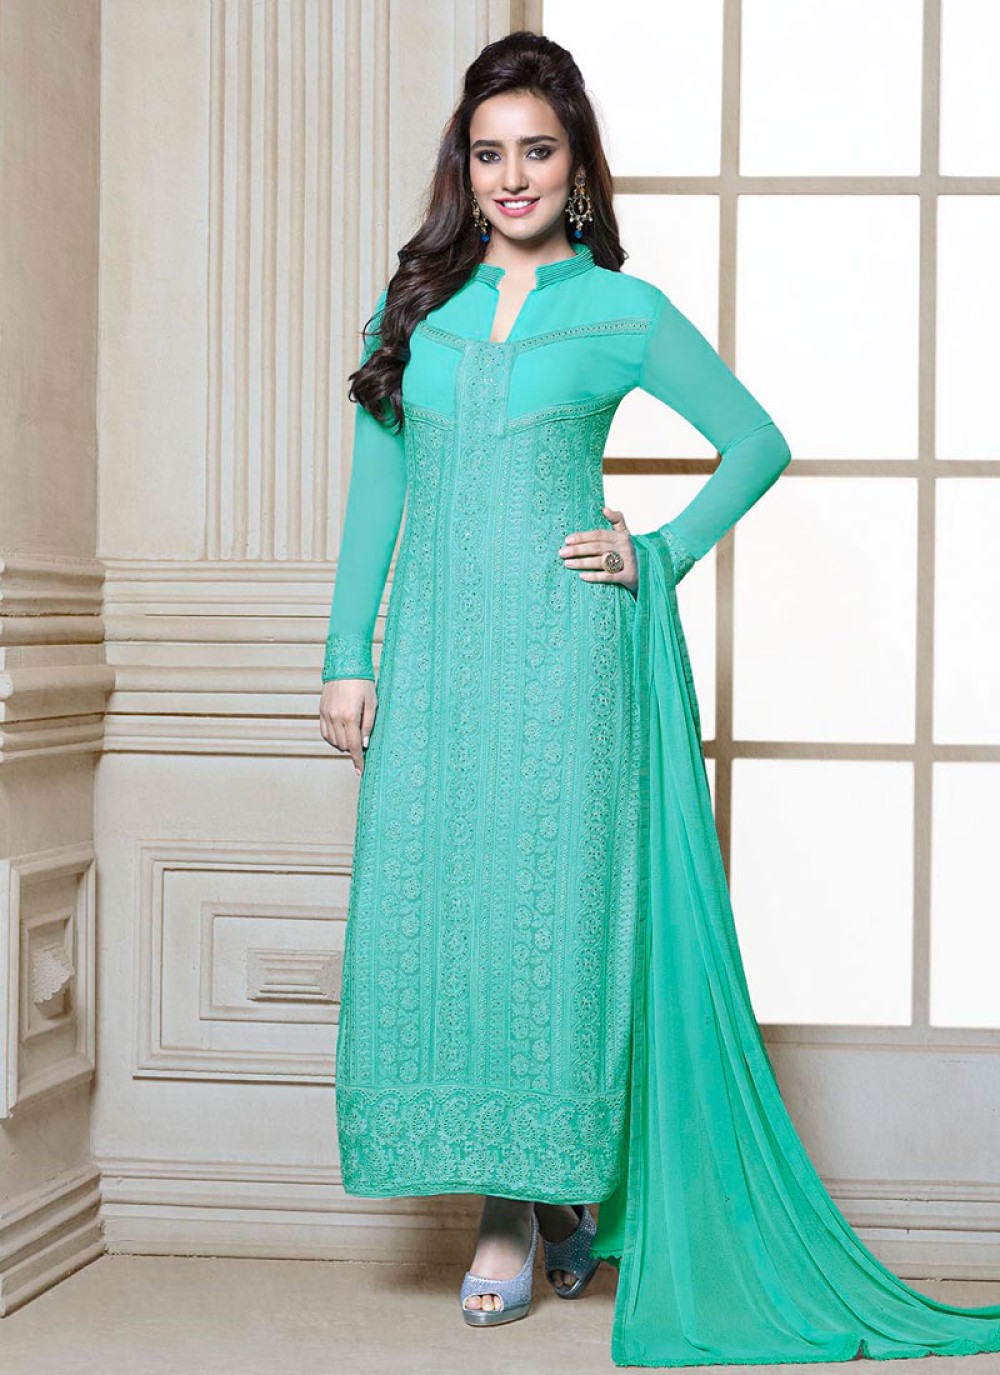 Neha Sharma Turquoise Blue Churidar Salwar Suit